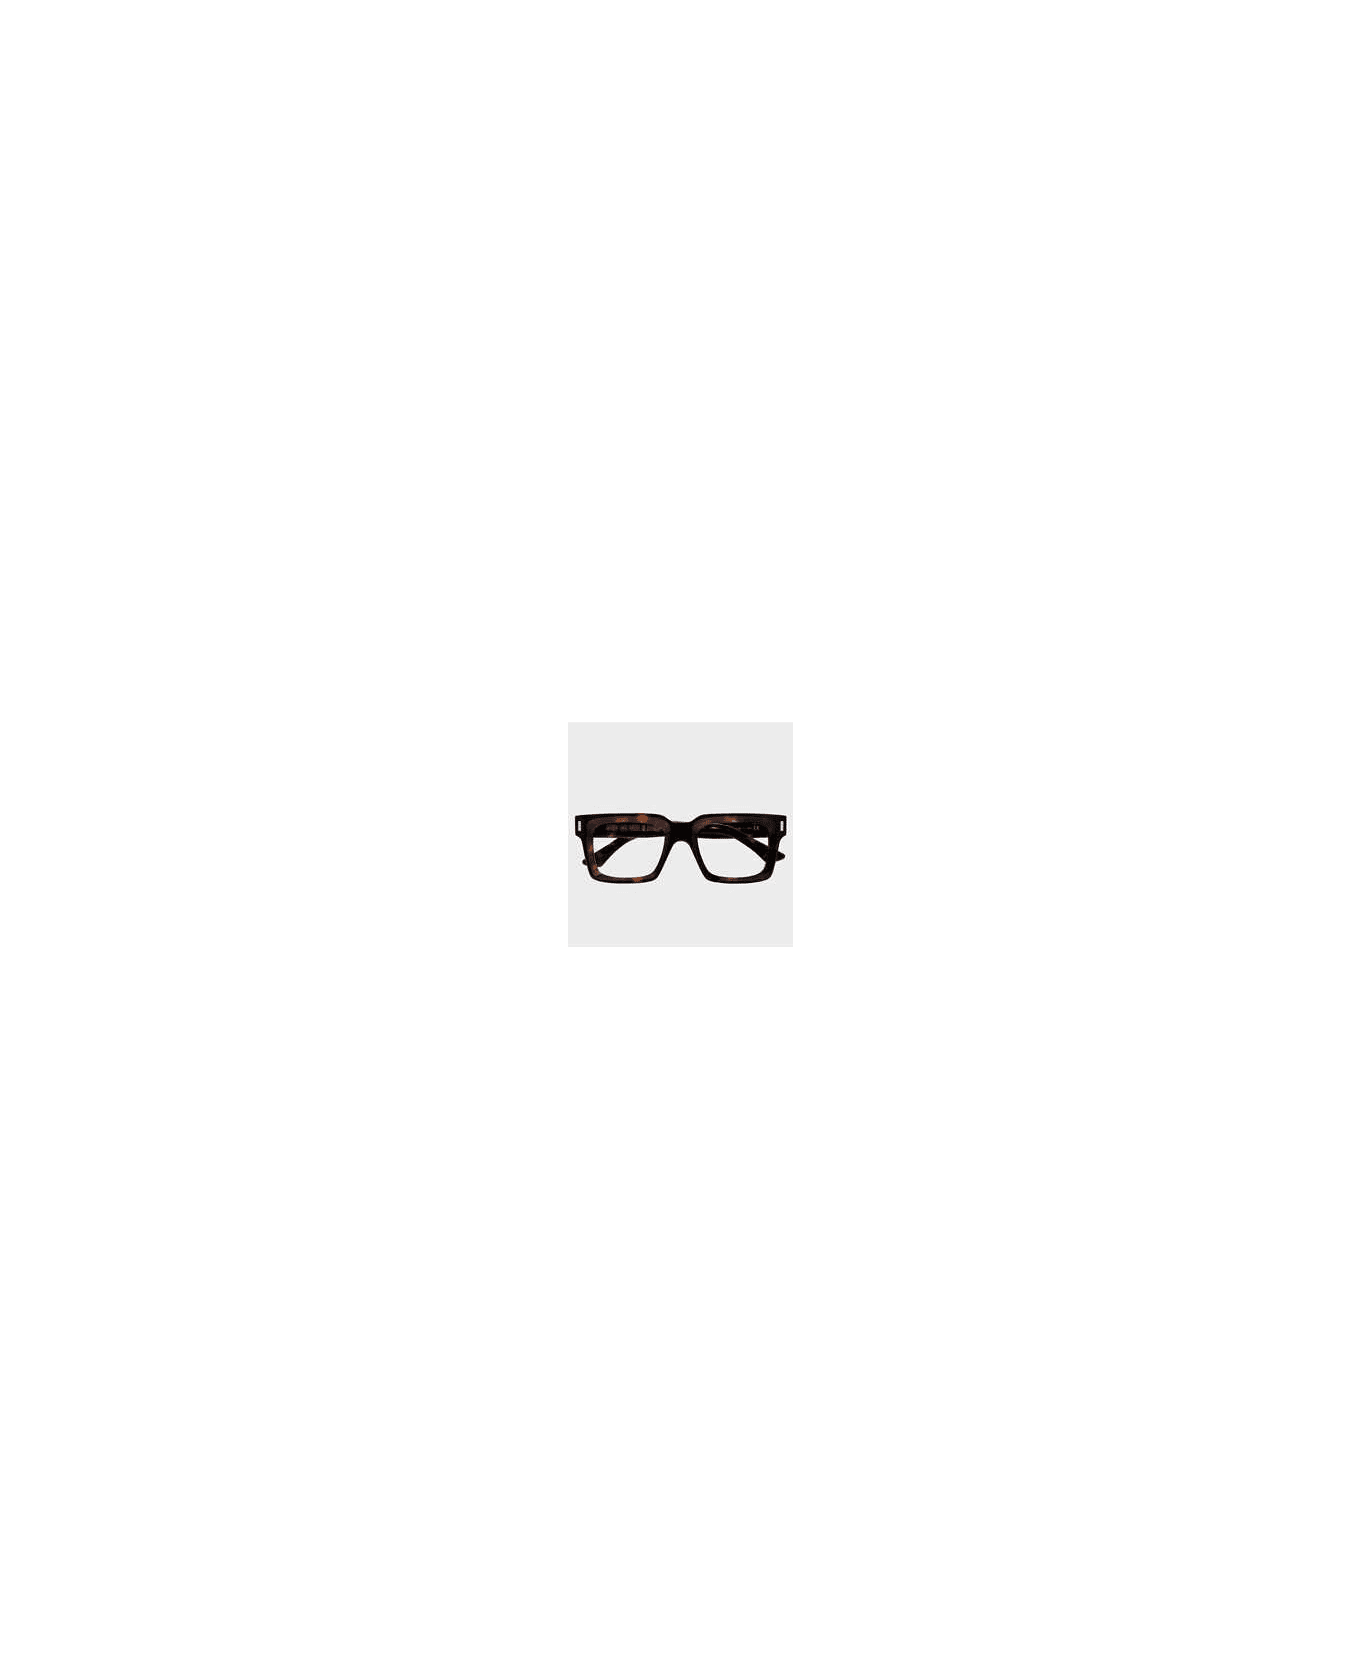 Cutler and Gross 1386 Eyewear - Dark Turtle アイウェア